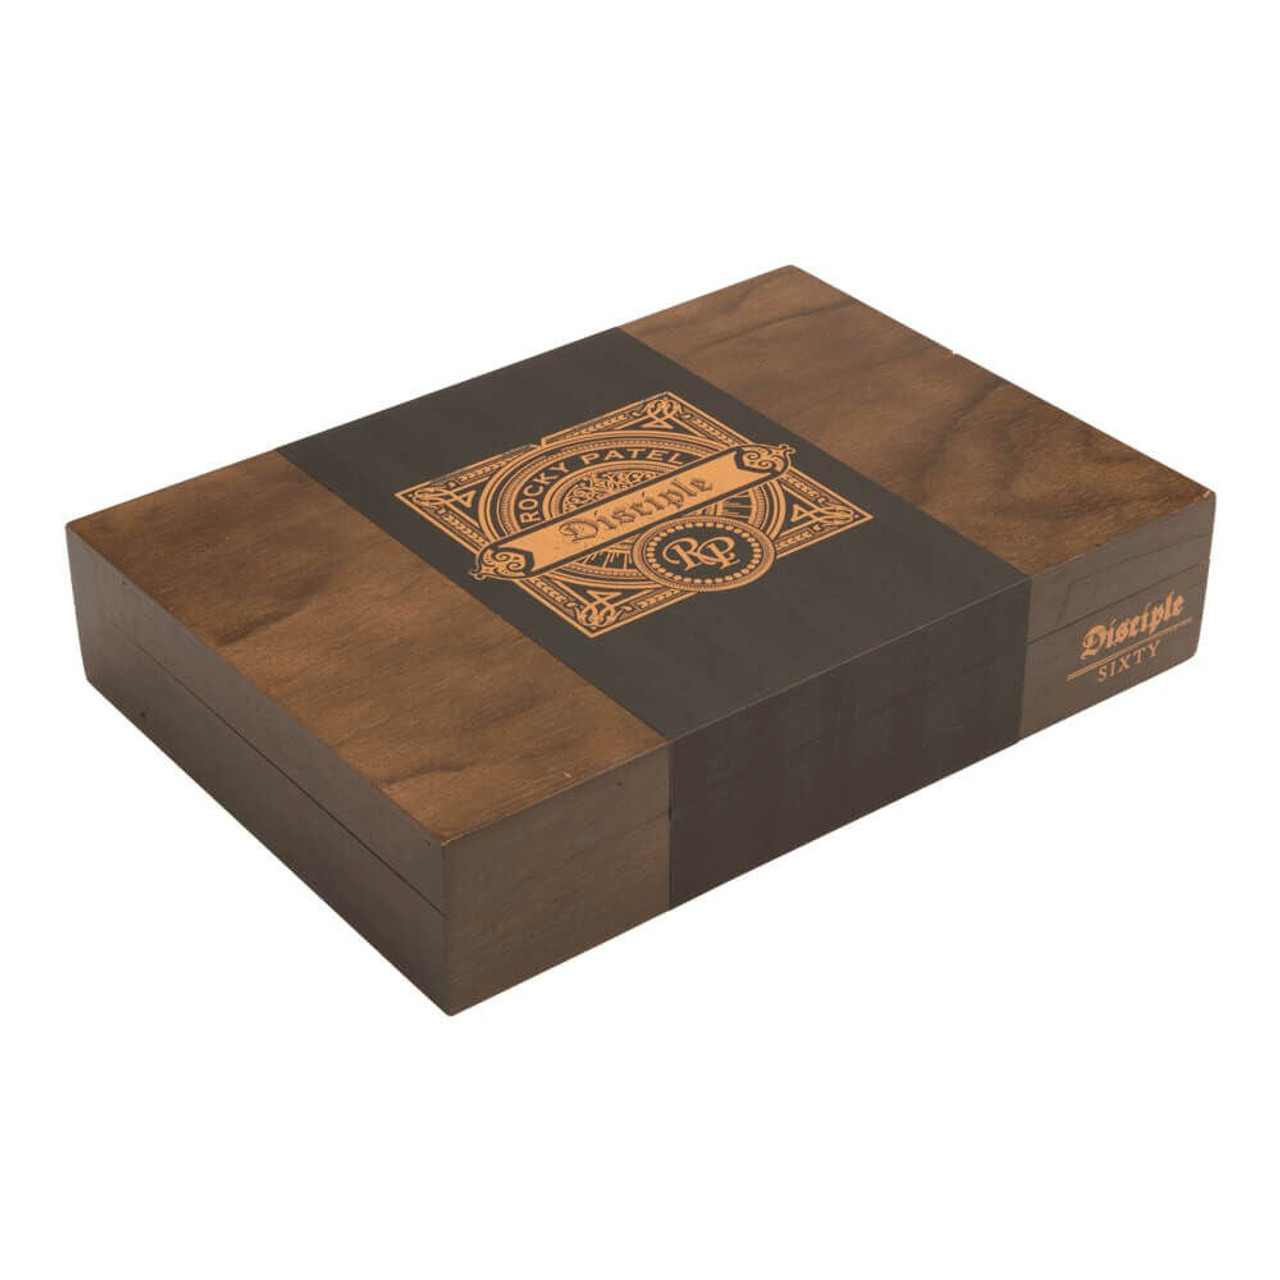 Rocky Patel Disciple Sixty Cigars - 6 x 60 (Box of 20) *Box